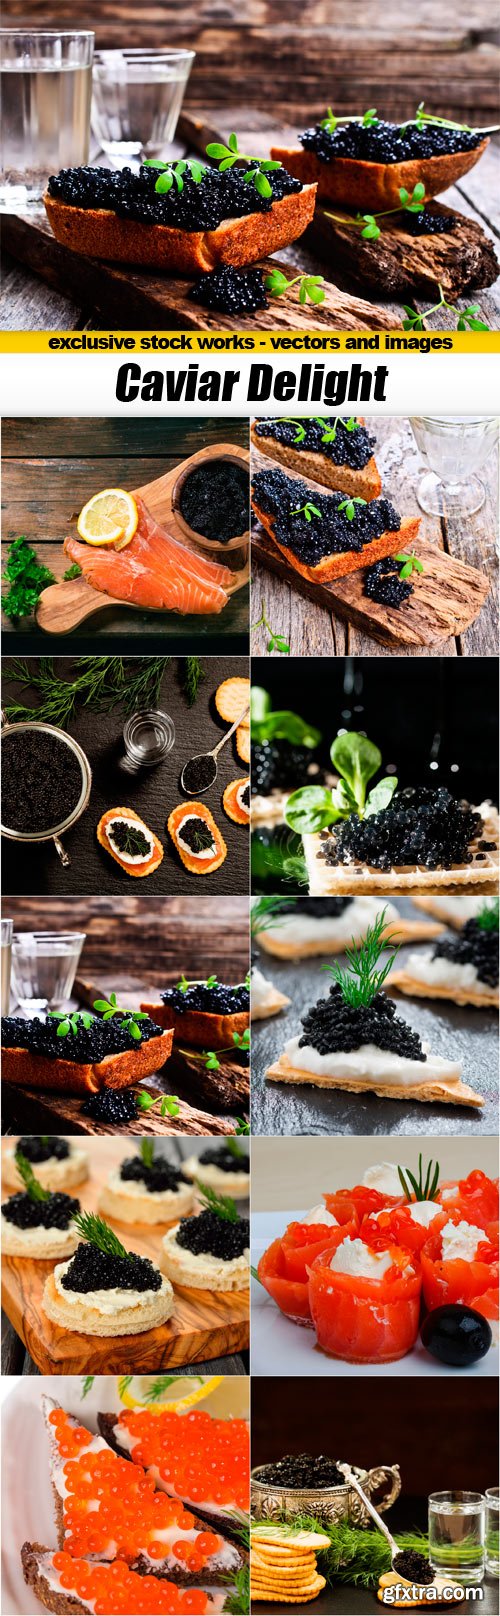 Caviar Delight - 10x JPEGs